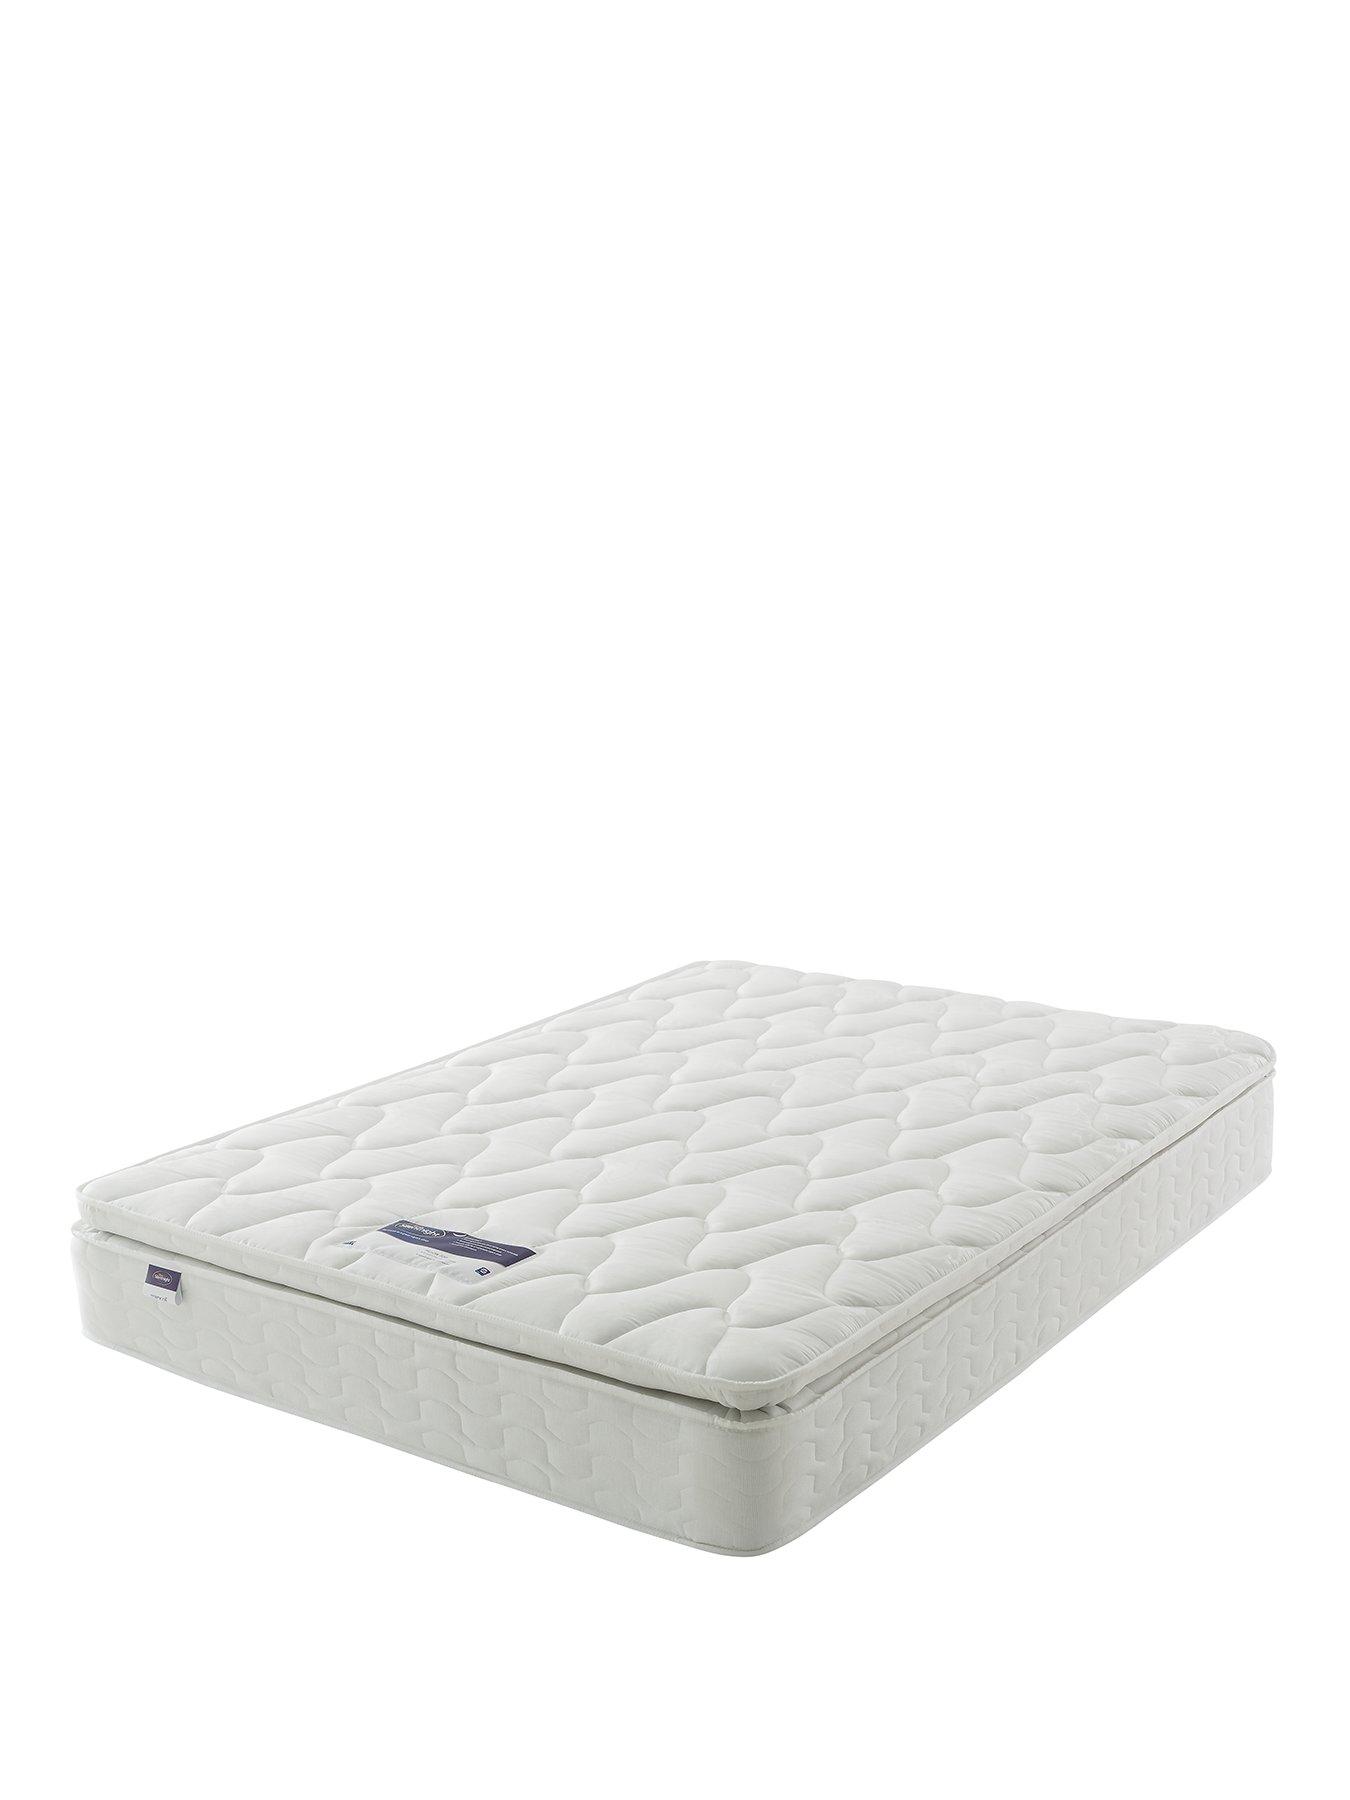 cot mattress 100 x 50 cm